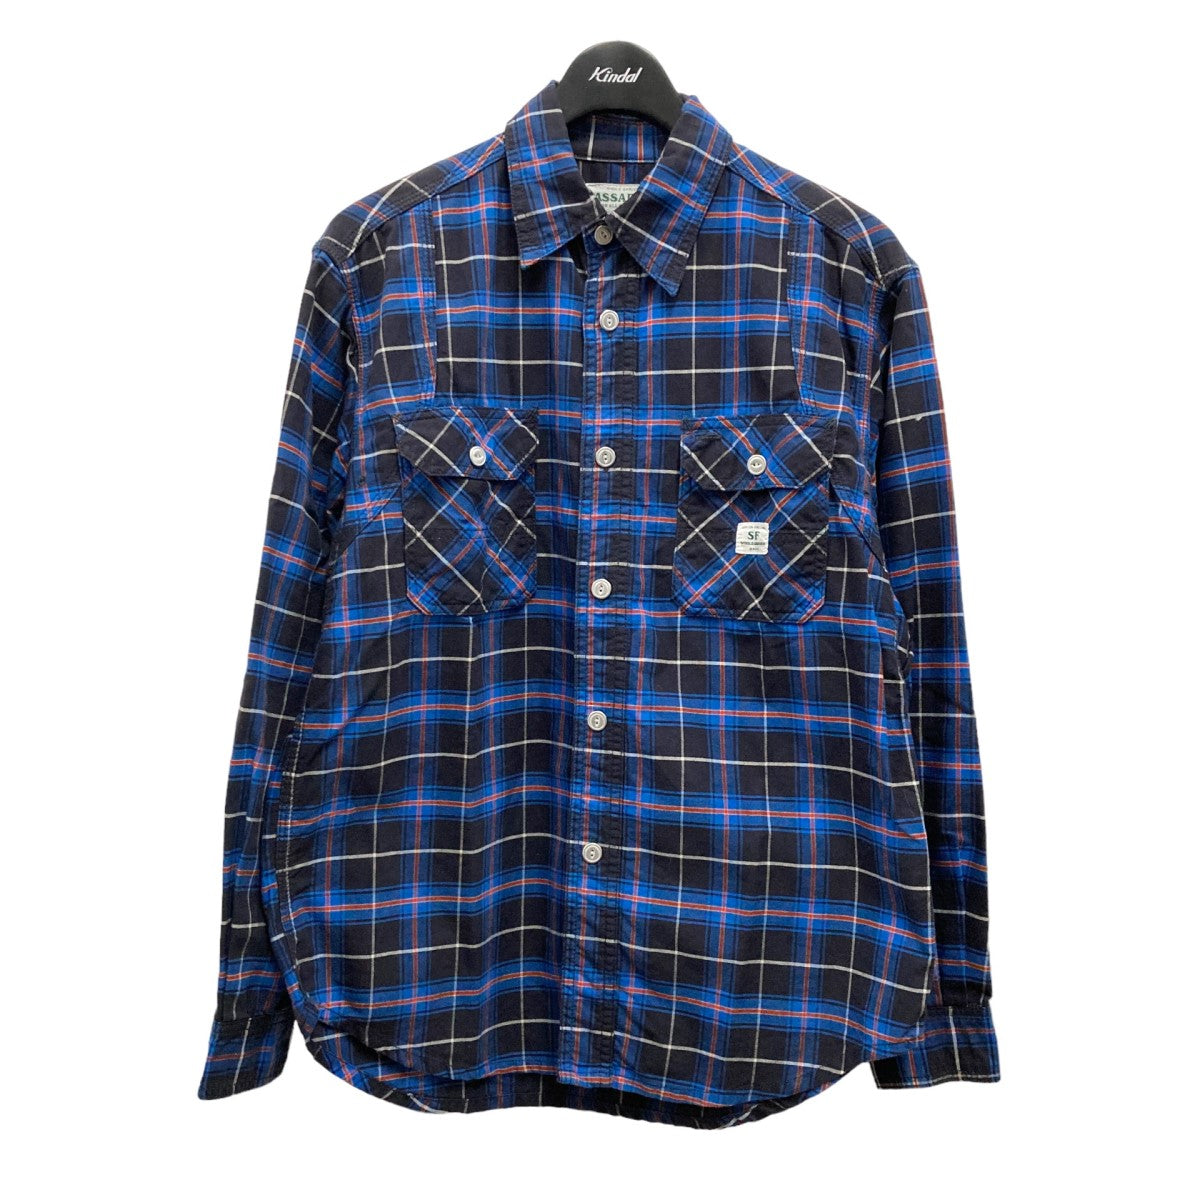 SASSAFRAS(ササフラス) チェックシャツ ブルー×ブラック サイズ 12 